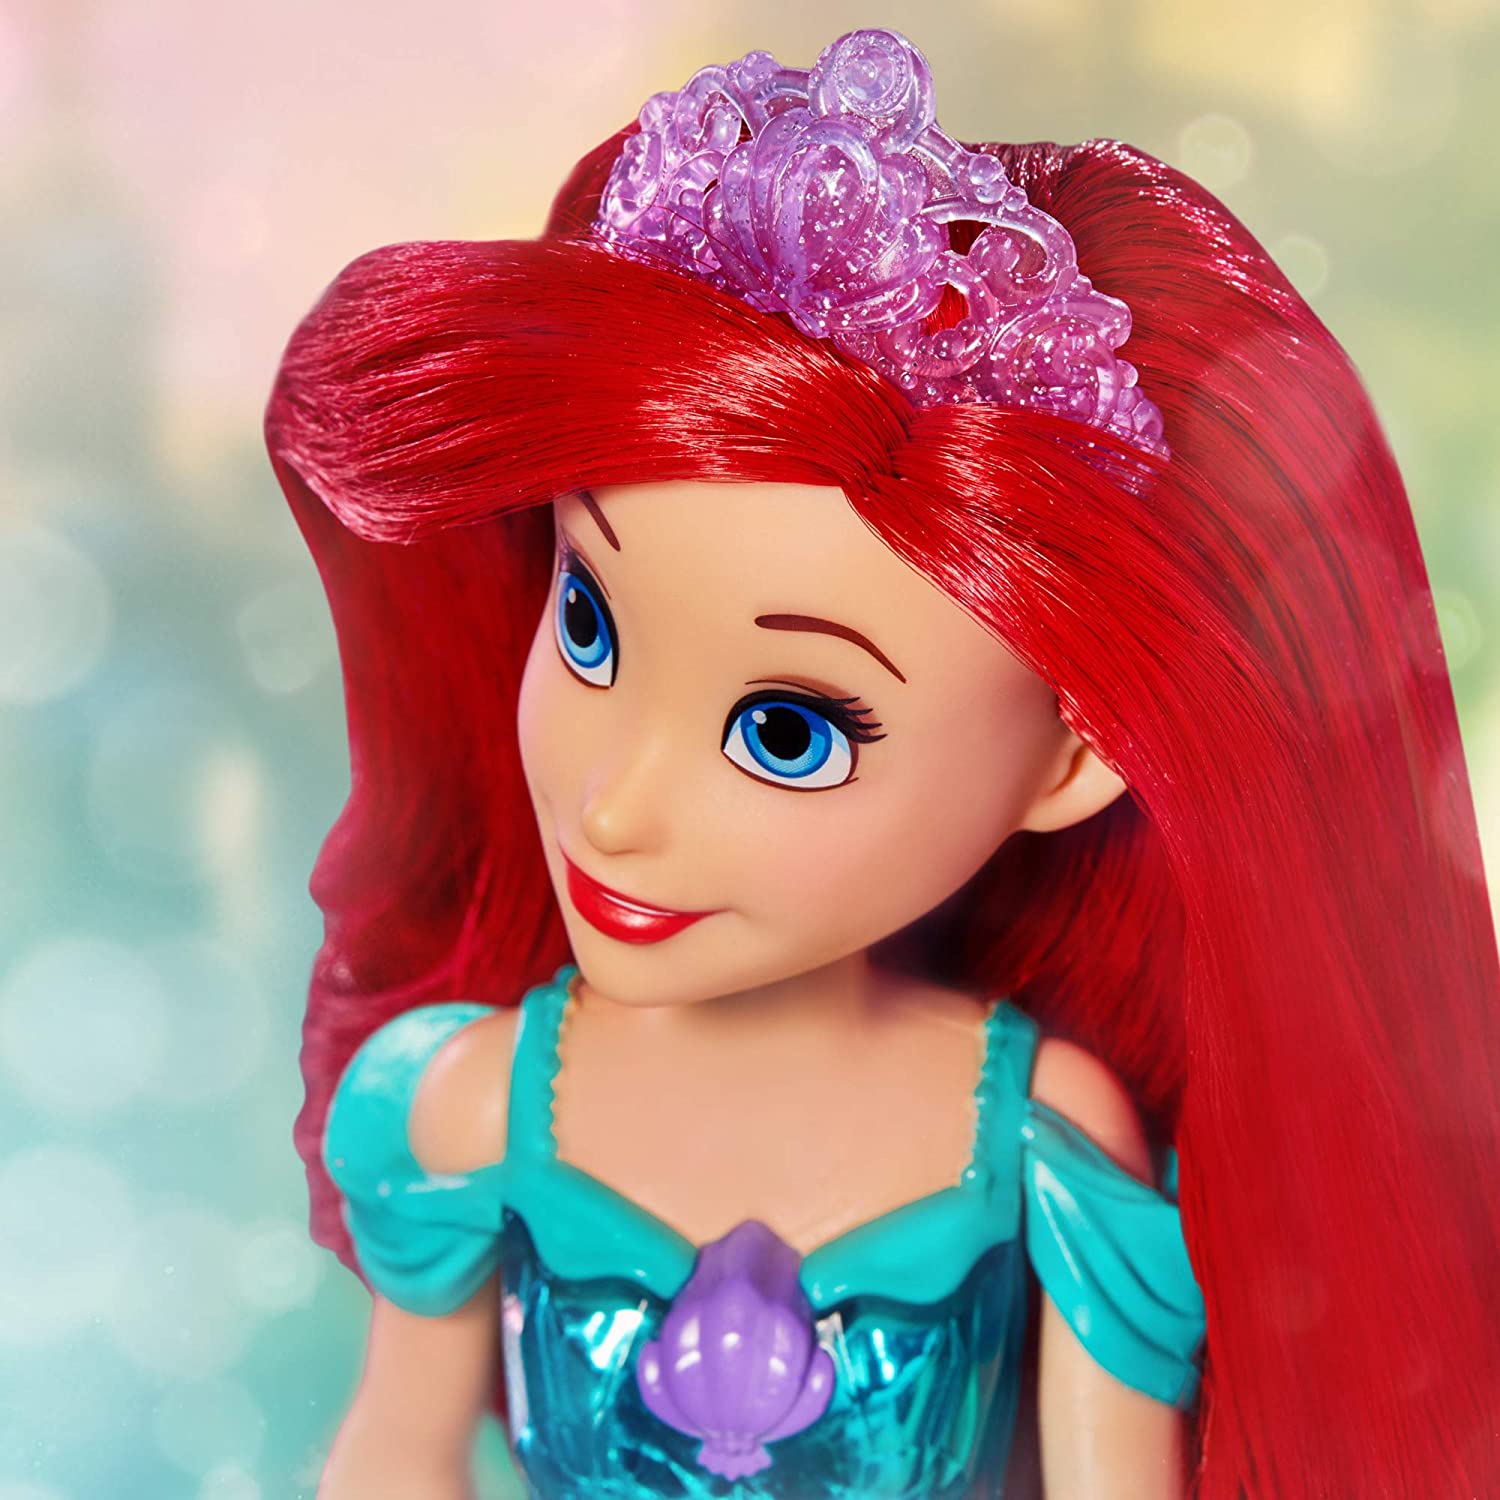 Disney Princess Royal Shimmer Ariel